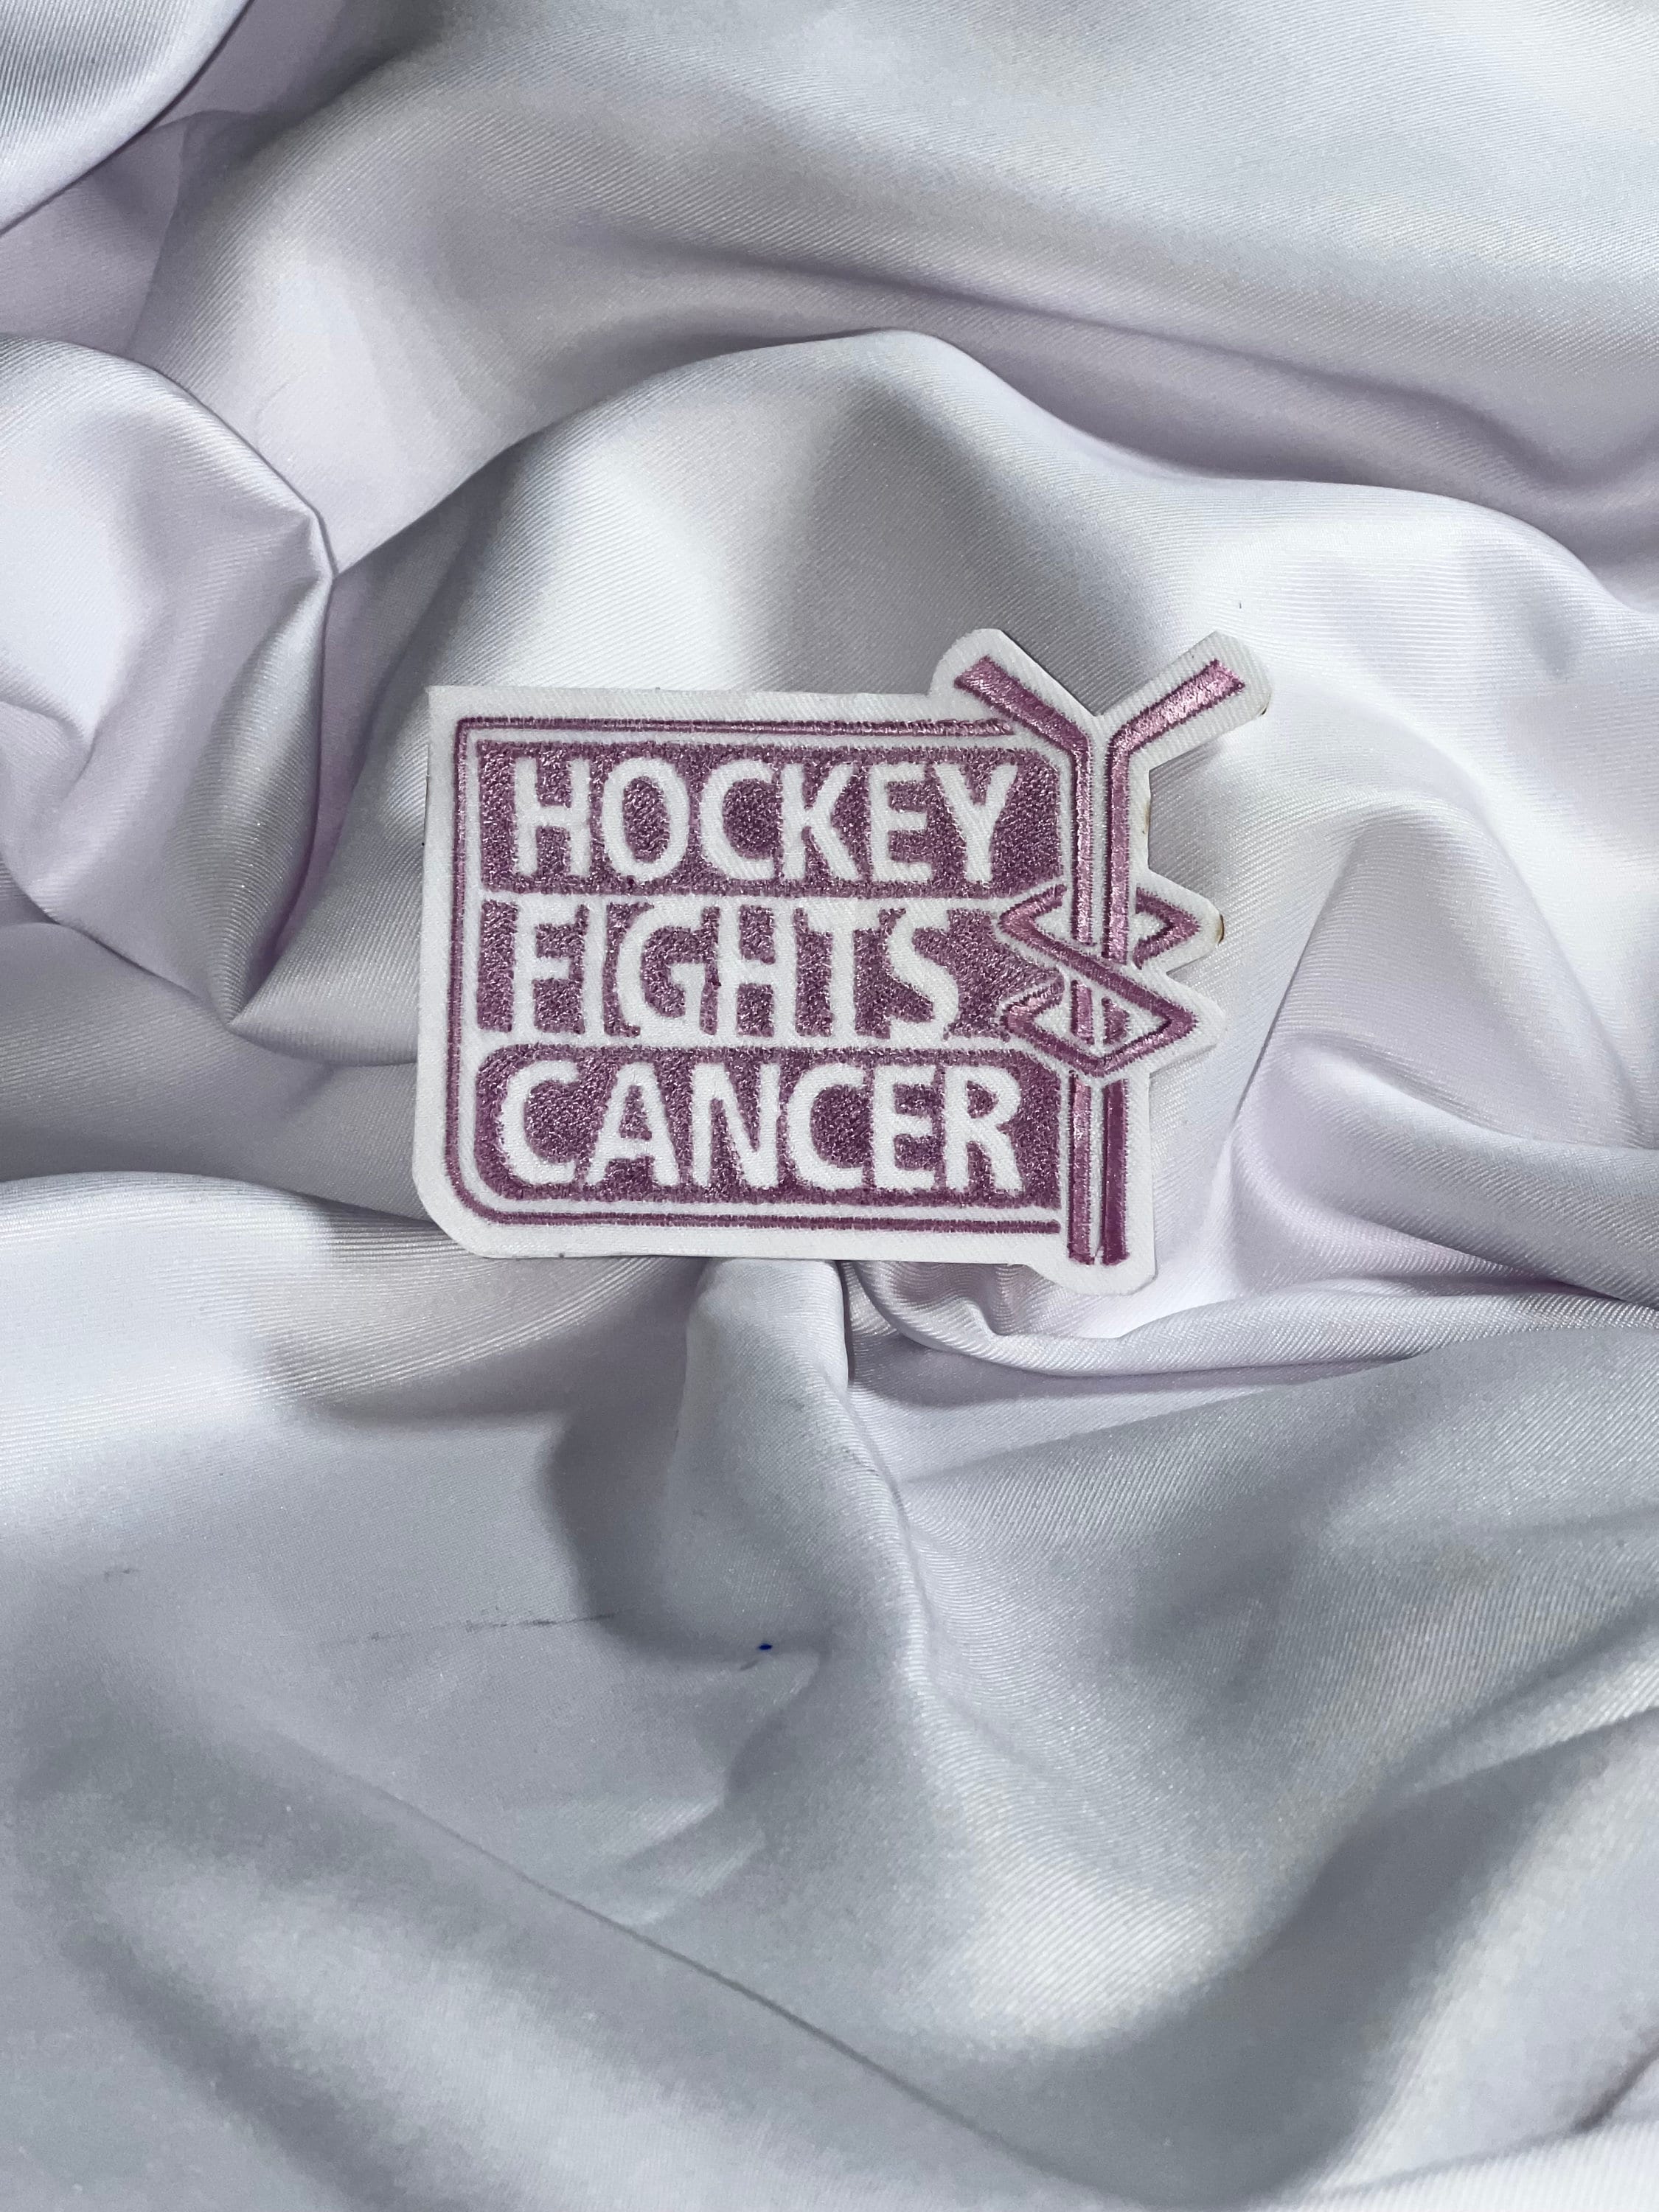 VGK to host 'Hockey Fights Cancer Night